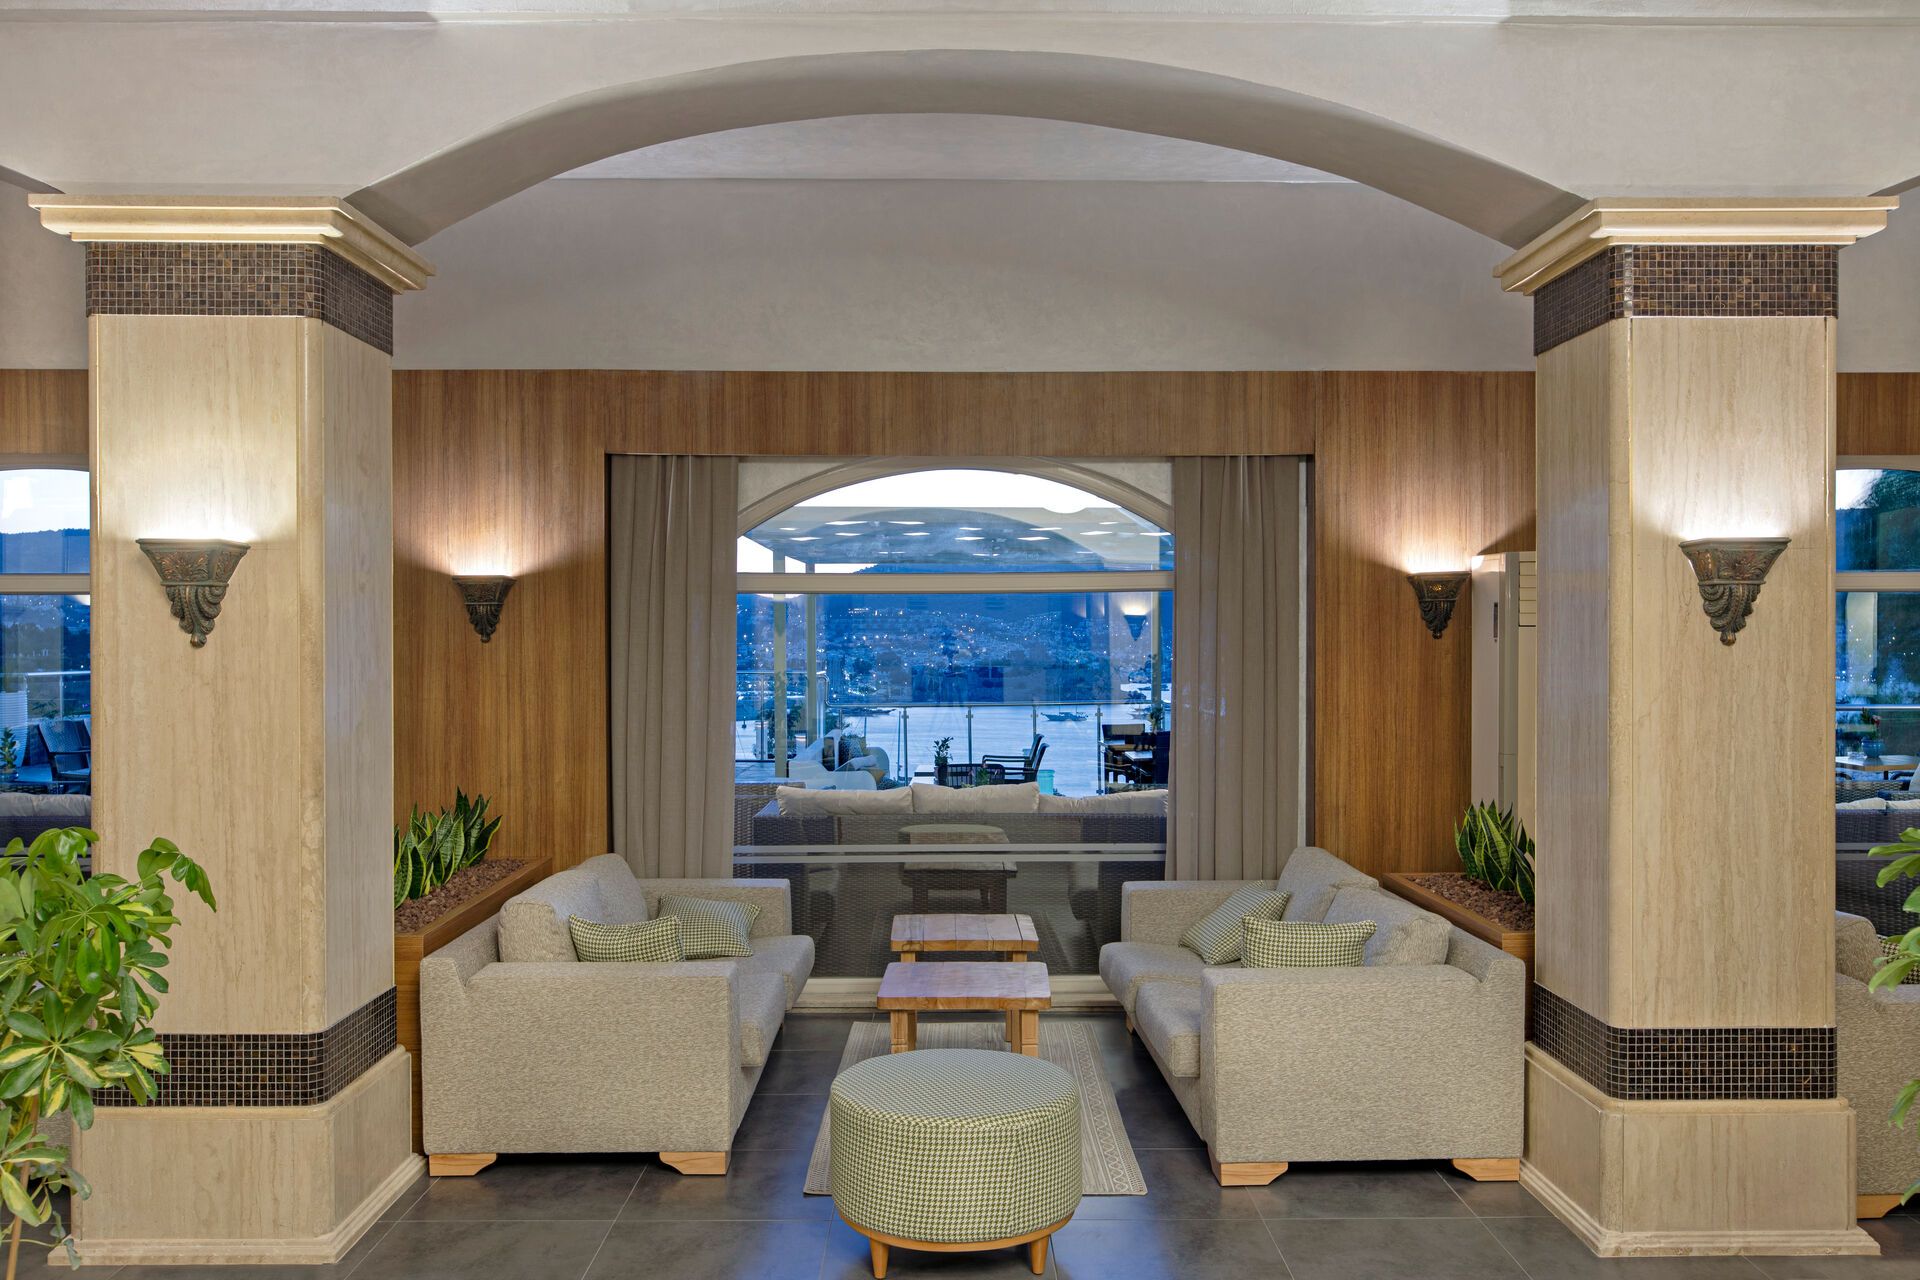 Turquie - Bodrum - Hôtel Bodrum Bay Resort 4*